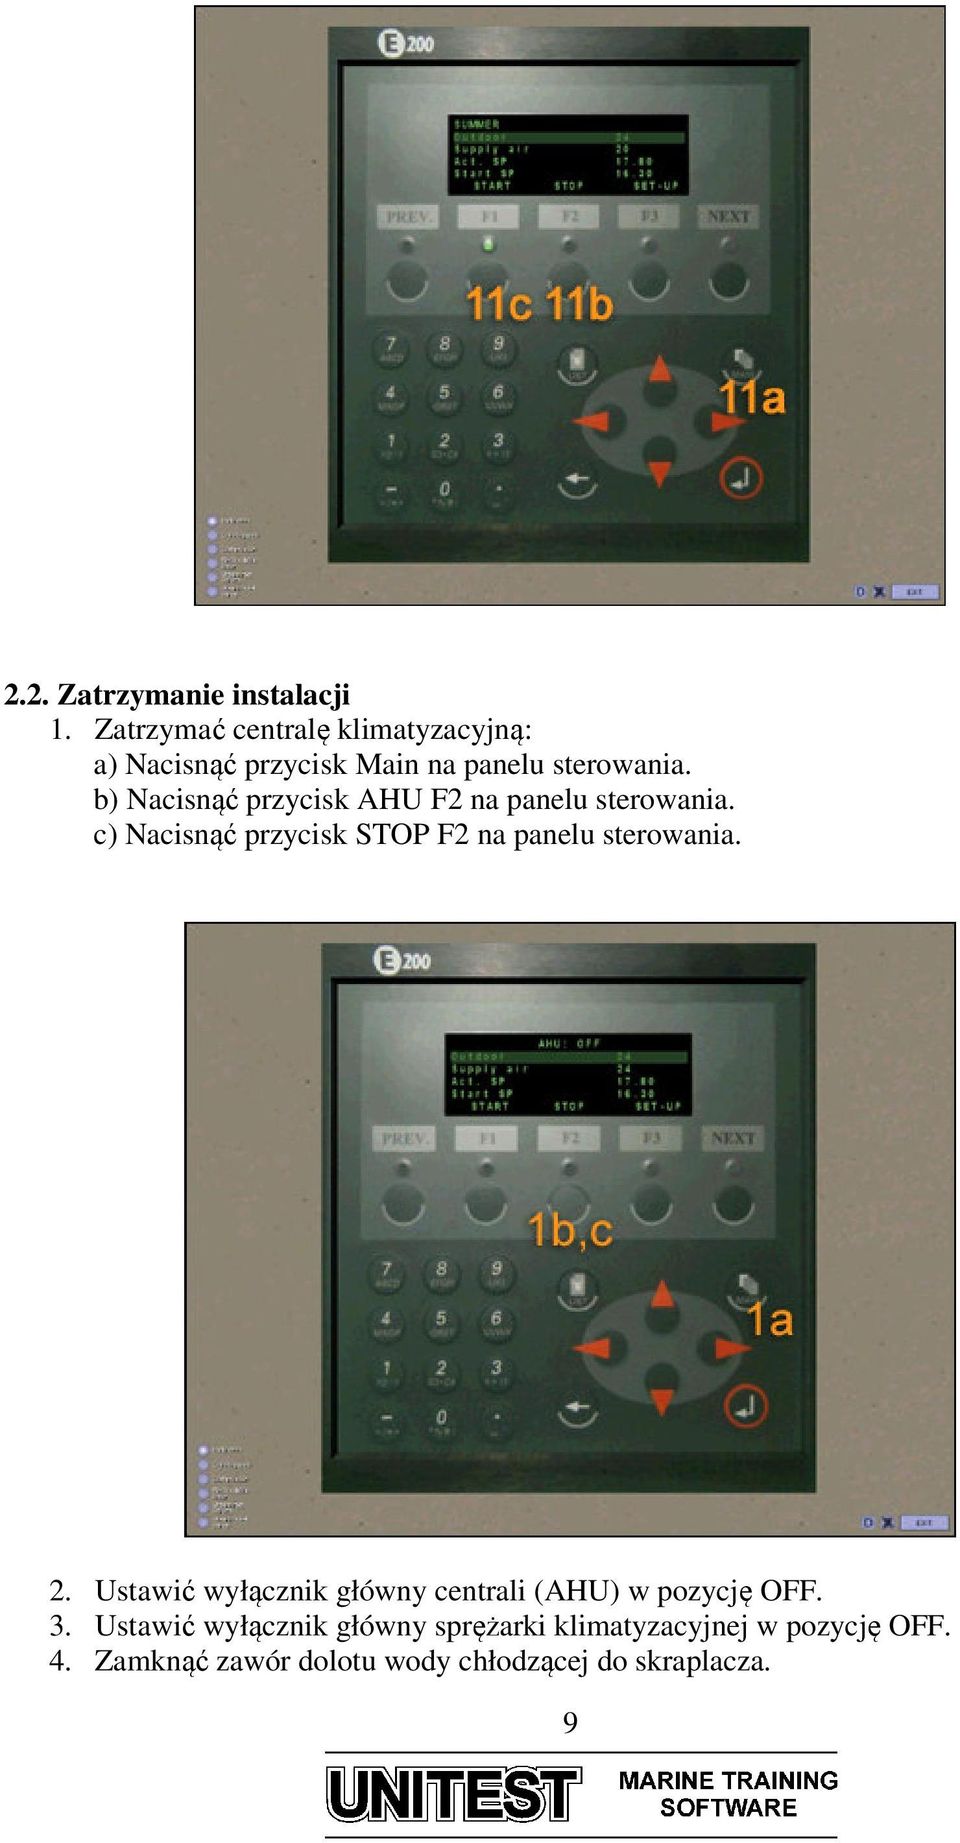 b) Nacisnąć przycisk AHU F2 na panelu sterowania. c) Nacisnąć przycisk STOP F2 na panelu sterowania.